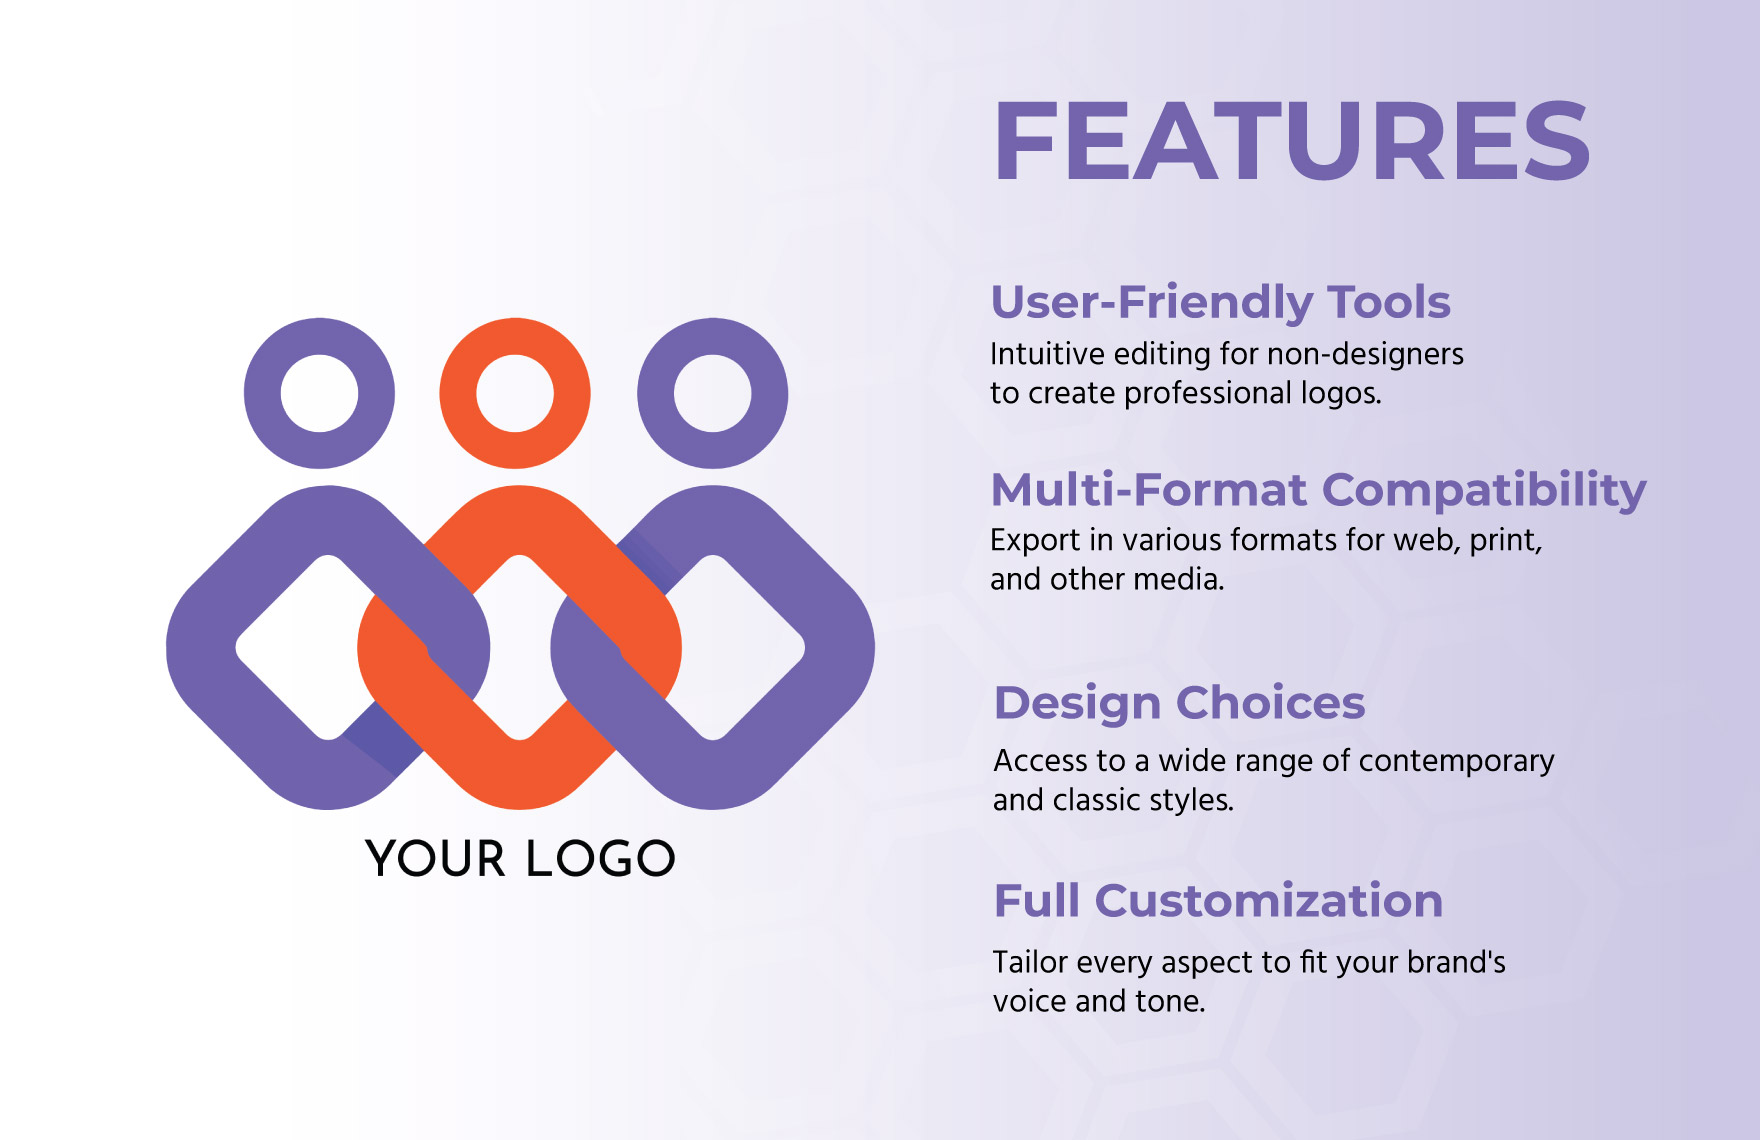 Customer Engagement Marketing Logo Template